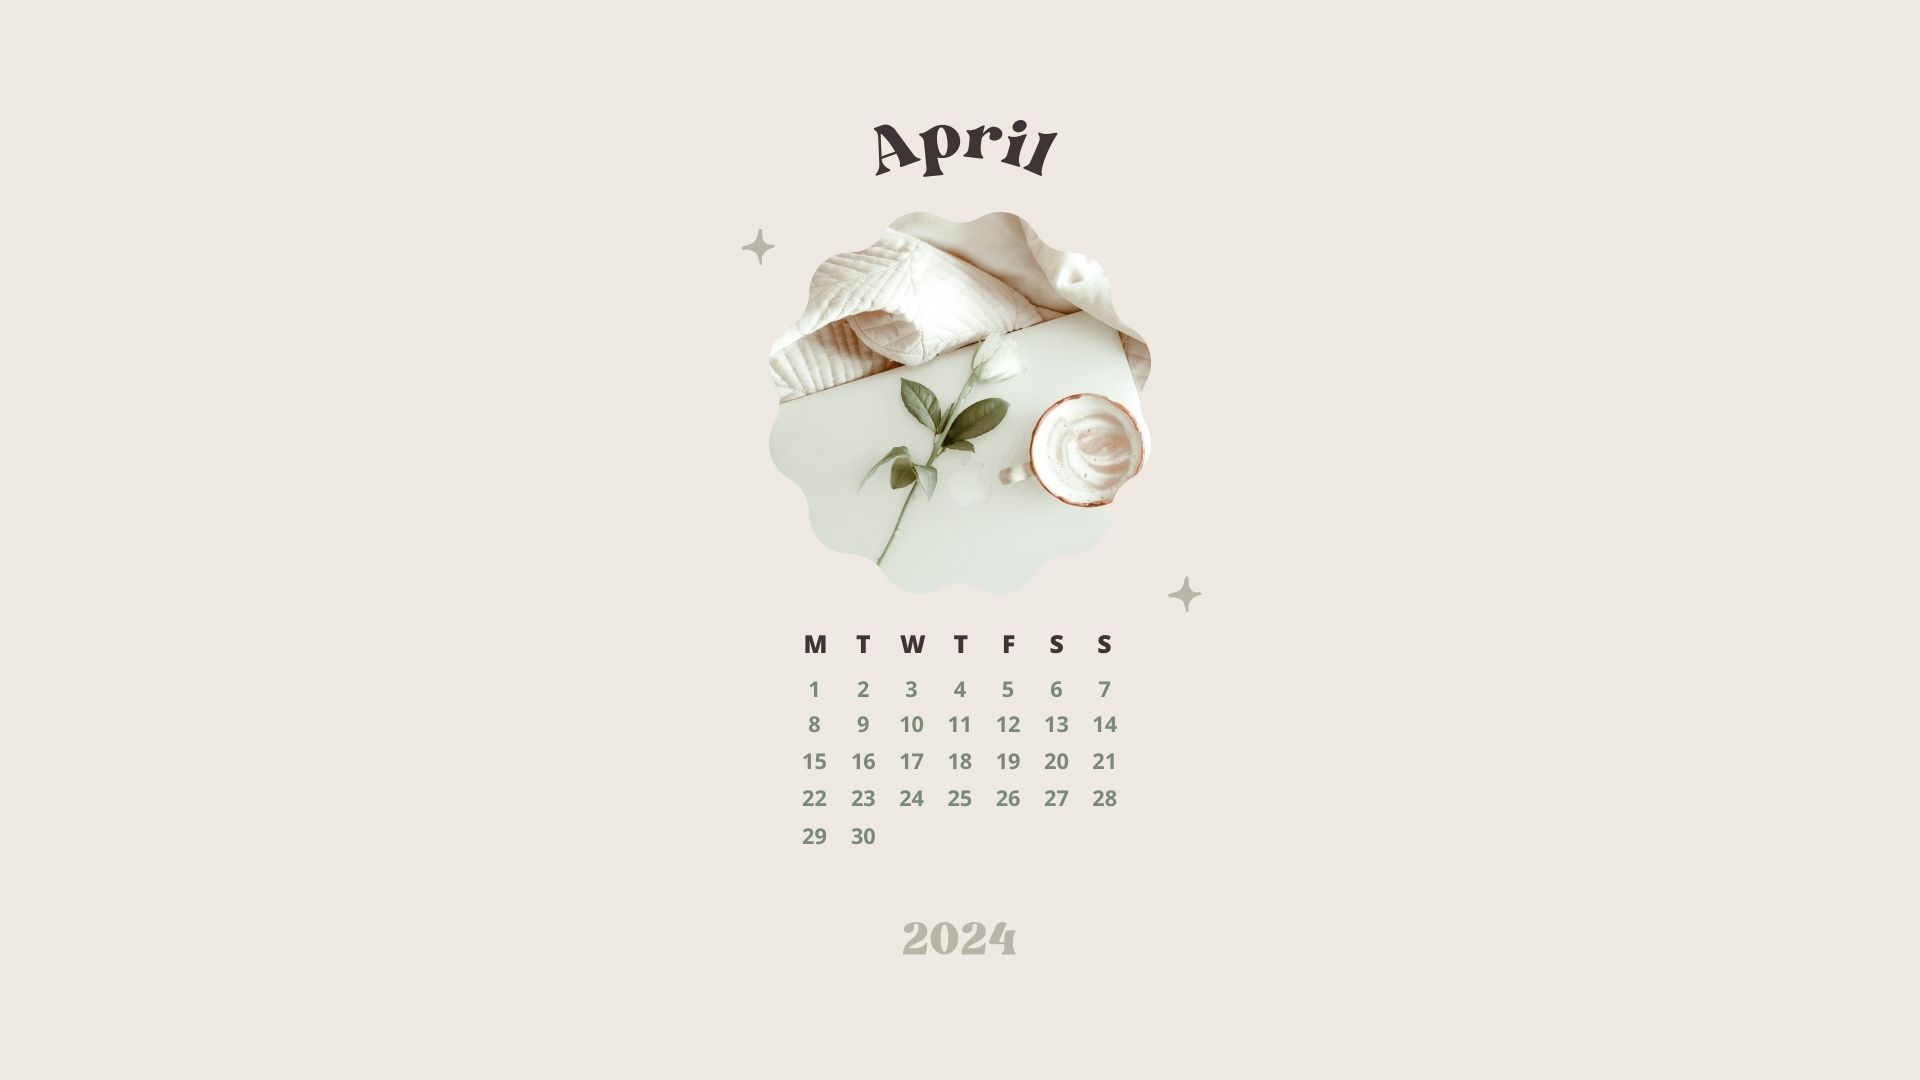 april 2024 sage green aesthetic desktop background wallpaper calendar